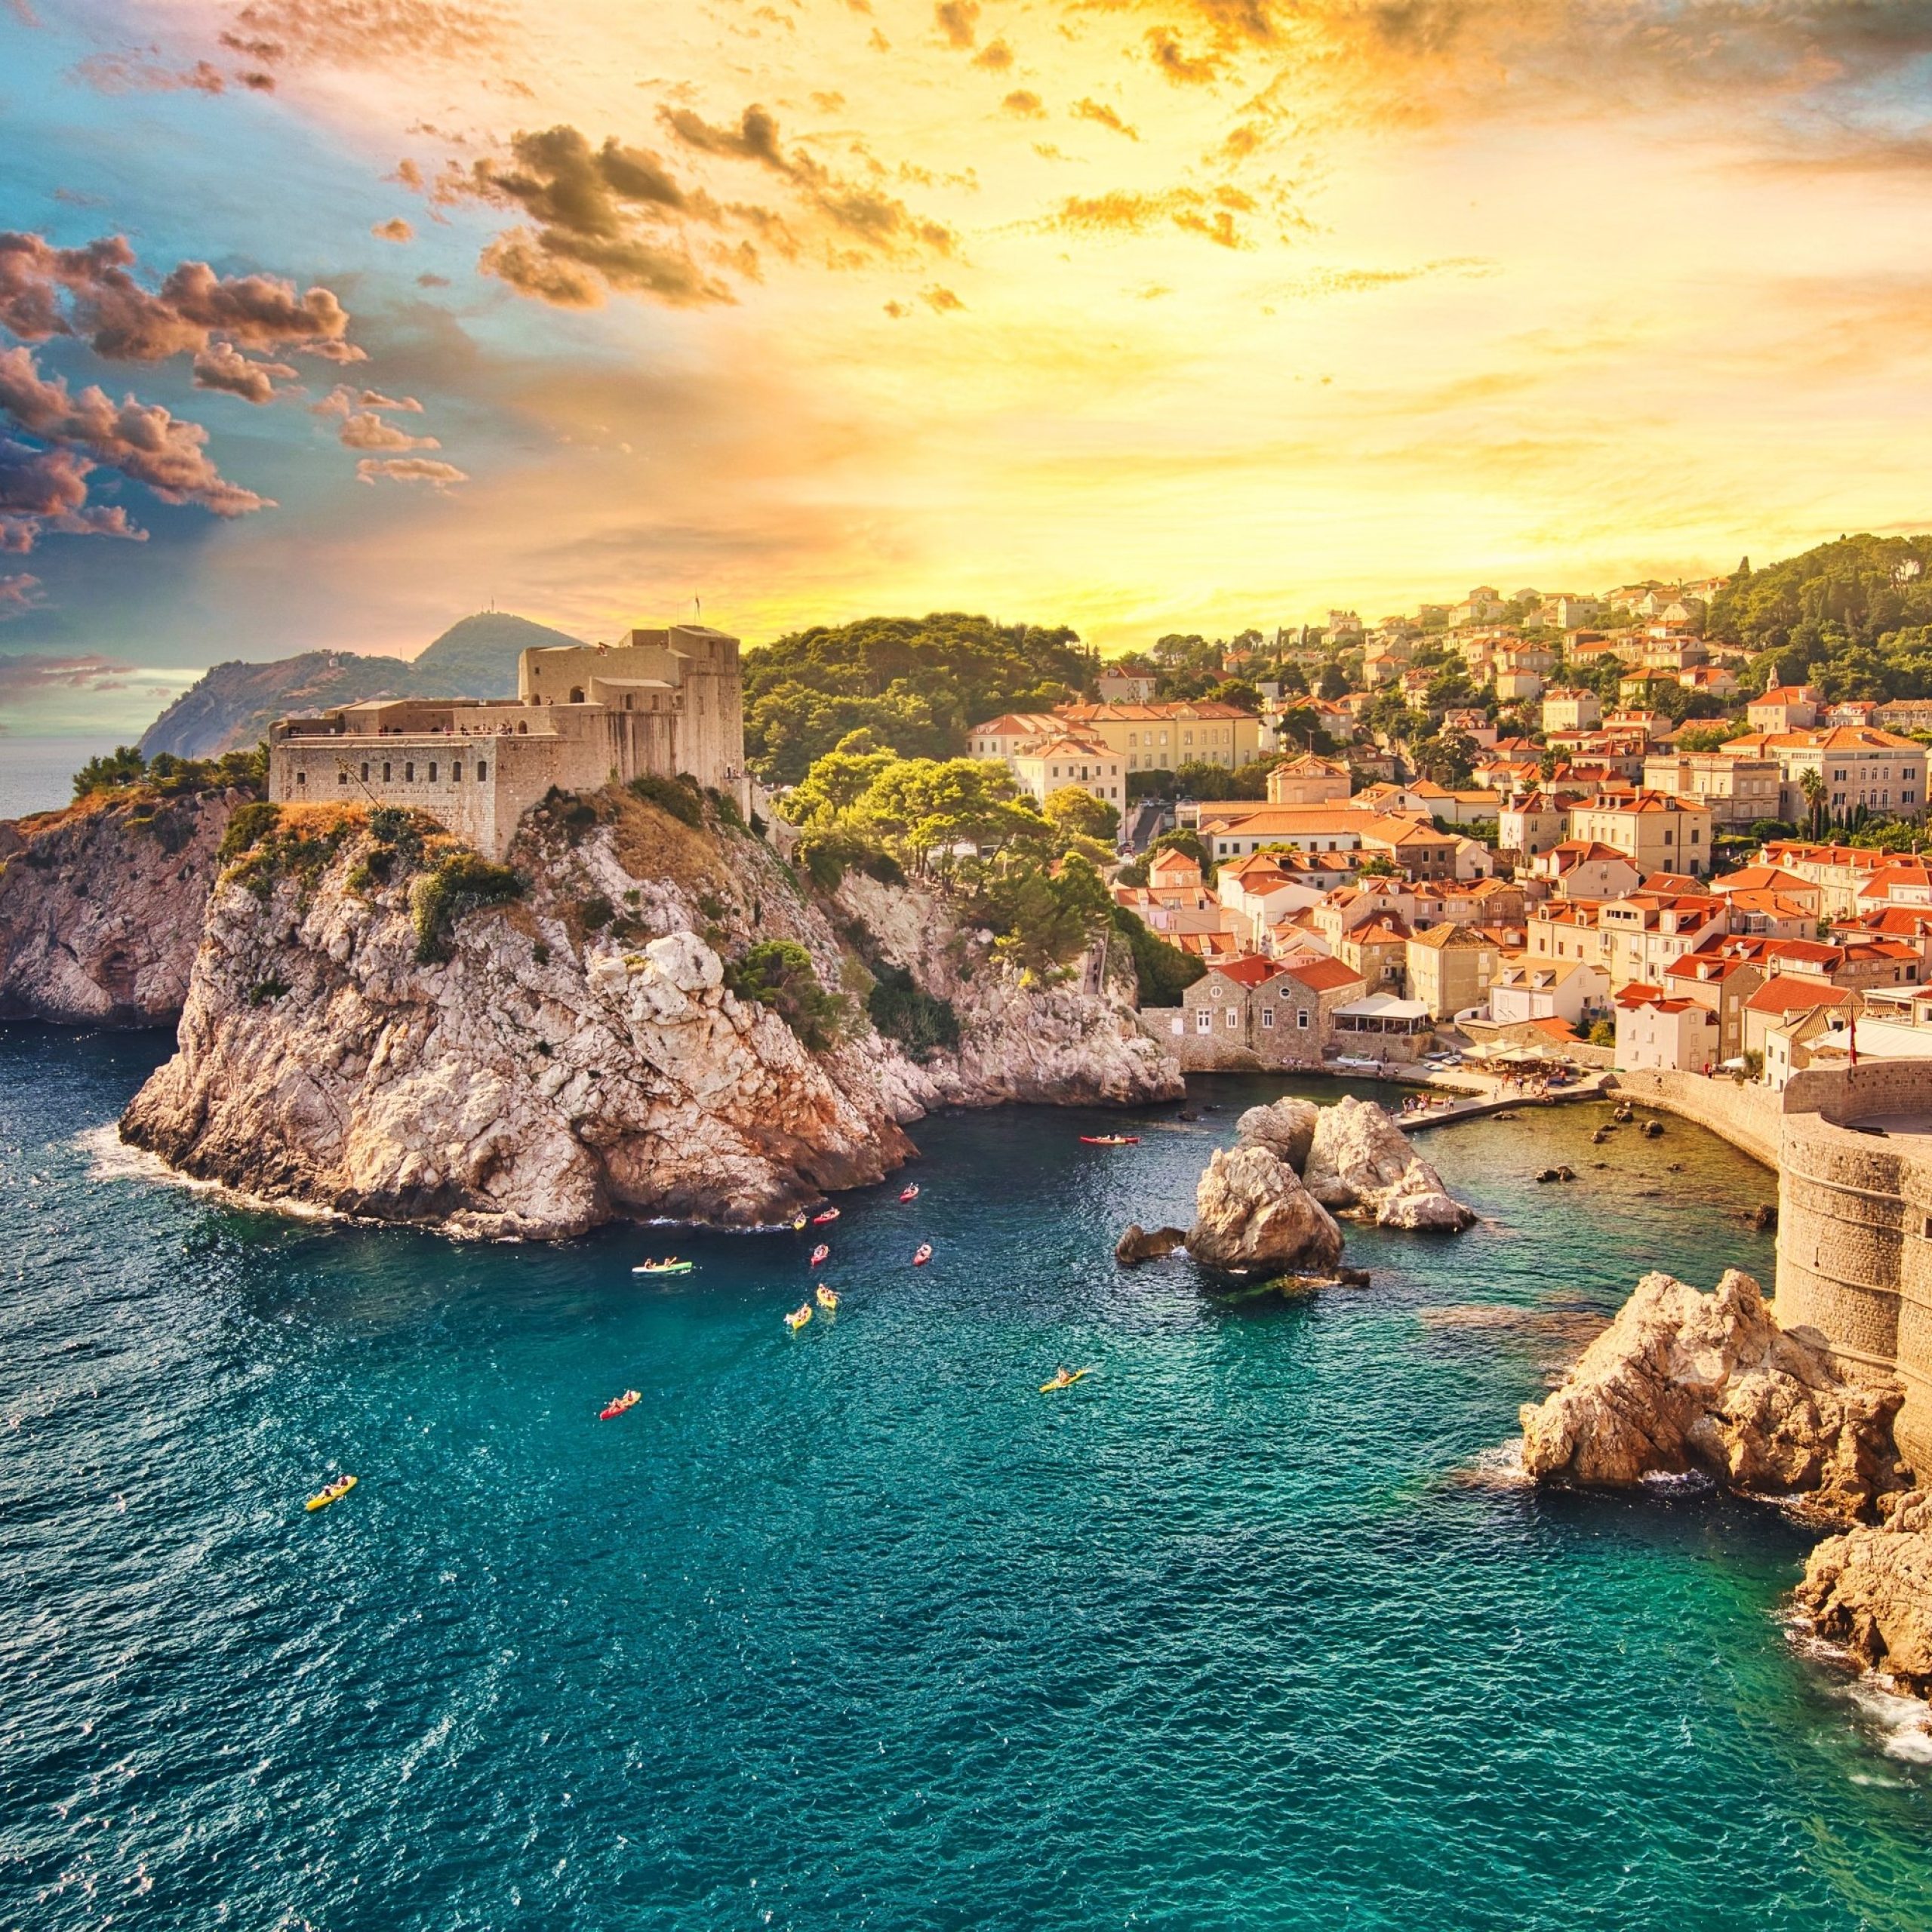 Day 14 Mostar – Transfer Day to Dubrovnik or Split (Croatia)